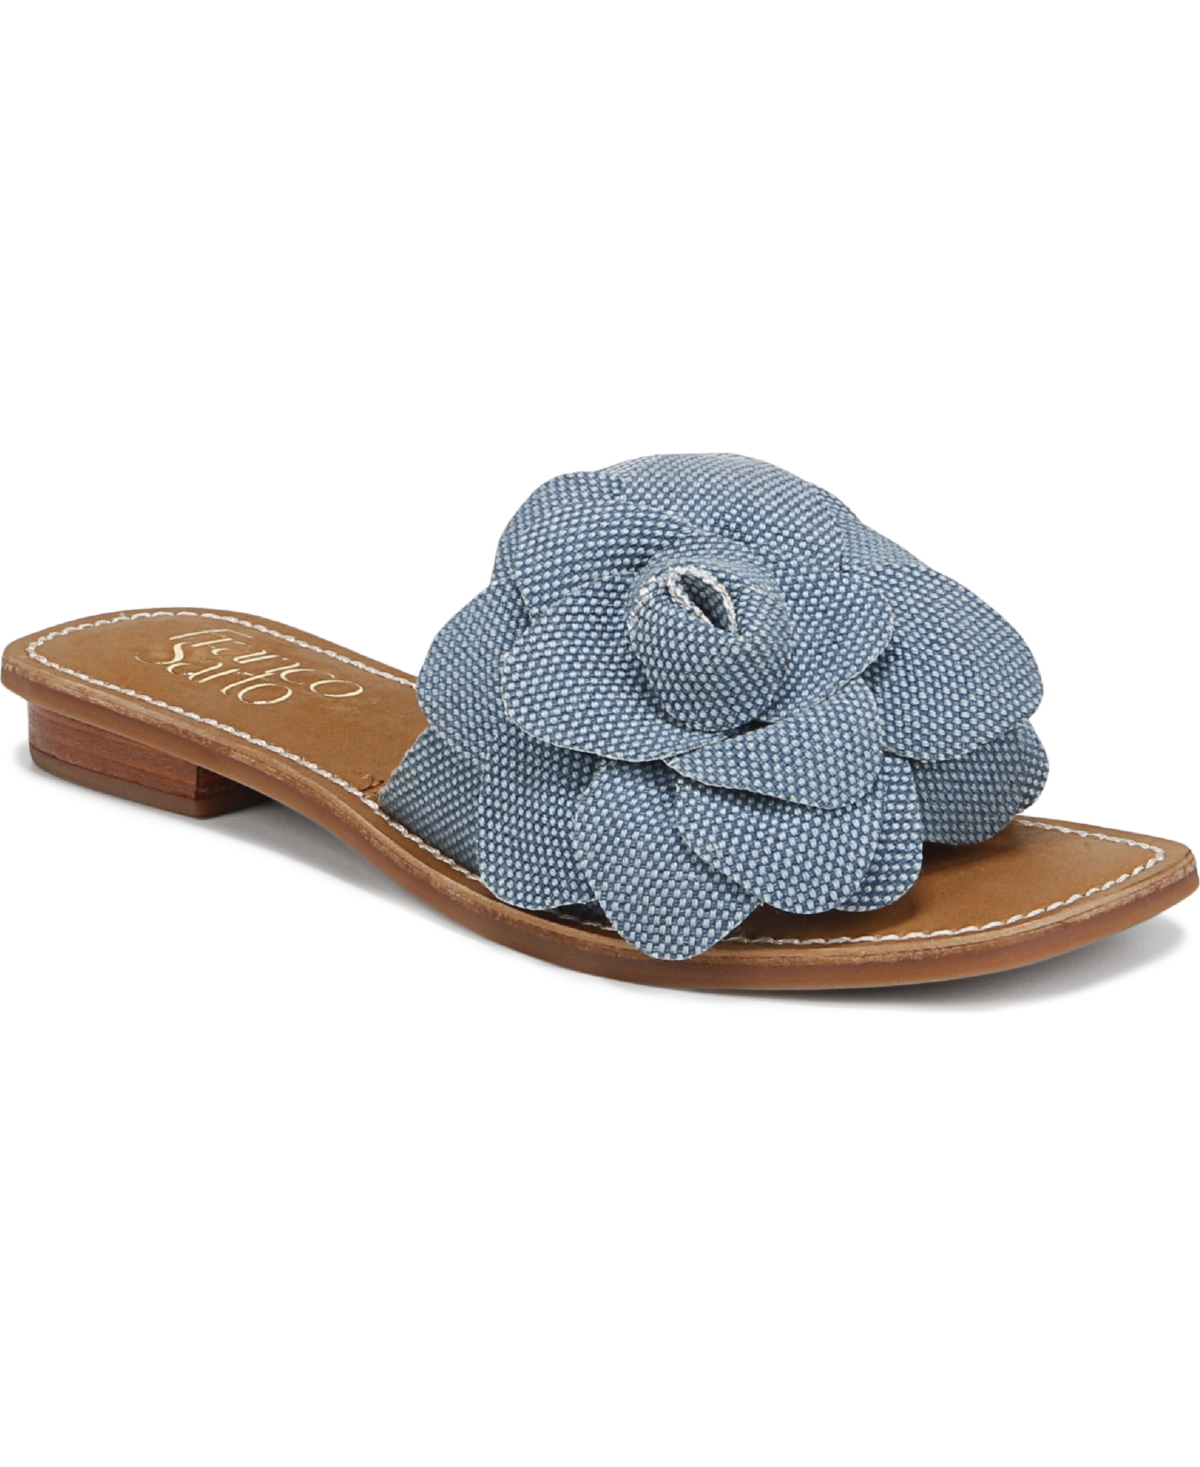 Tina 4 Slide Sandals - Denim Blue Fabric